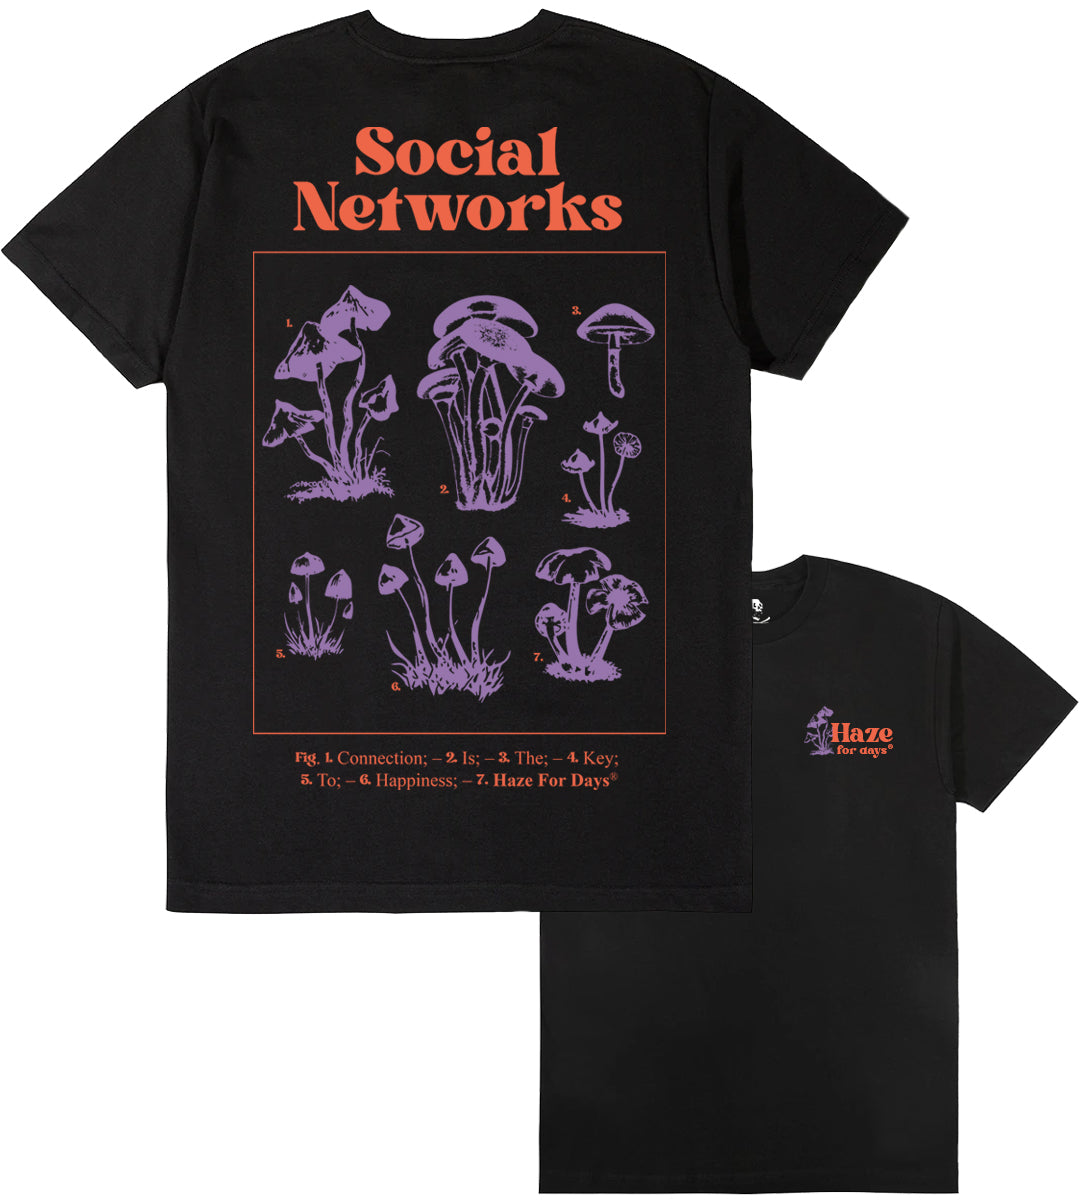 SOCIAL NETWORKS (Black)